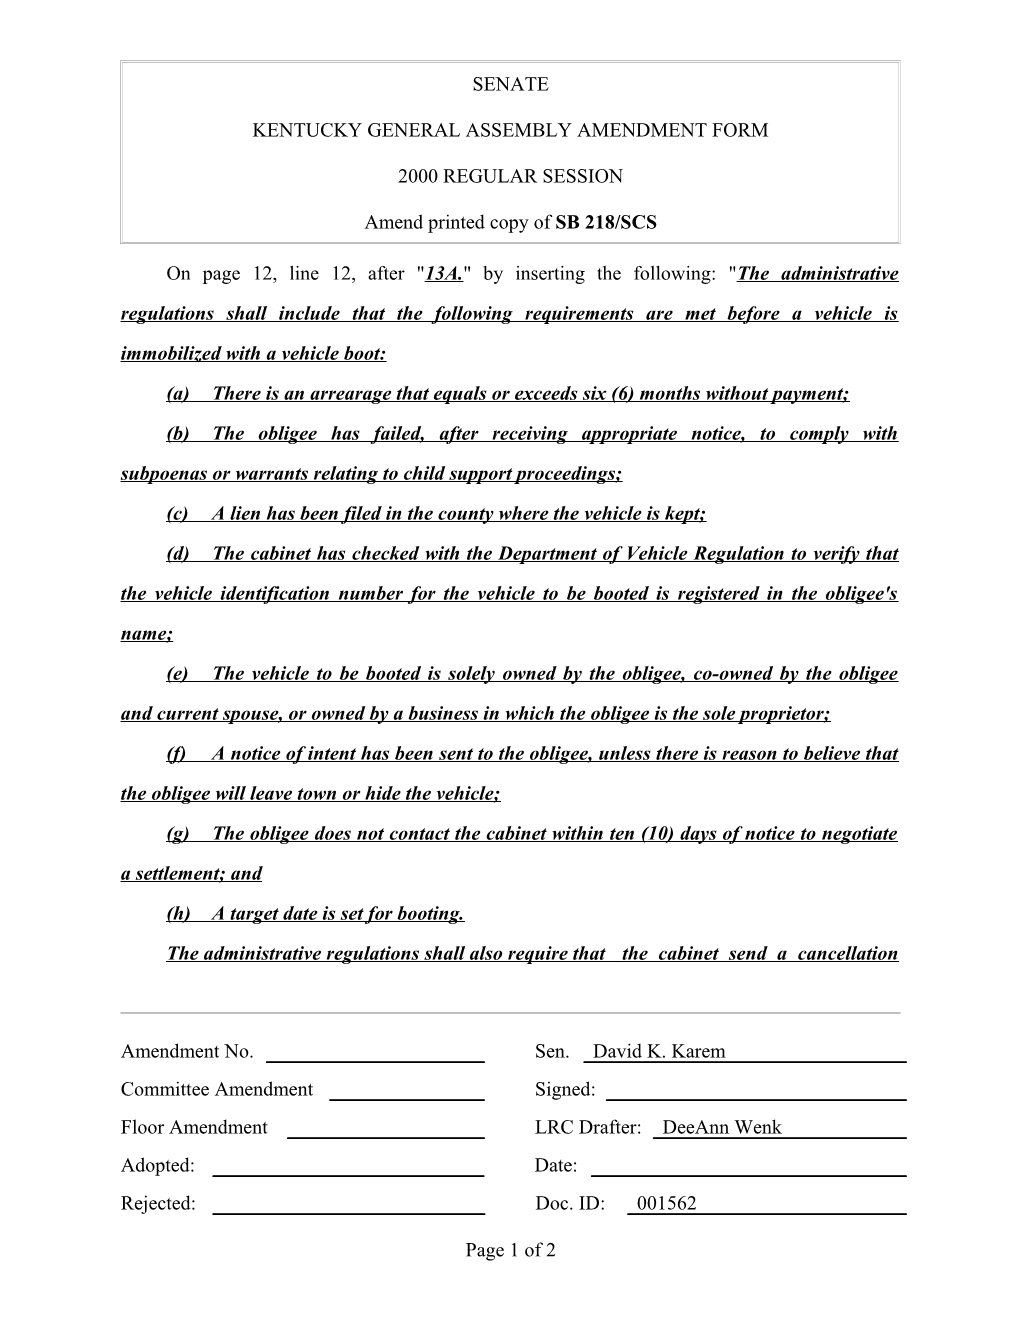 Kentucky General Assembly Amendment Form s3